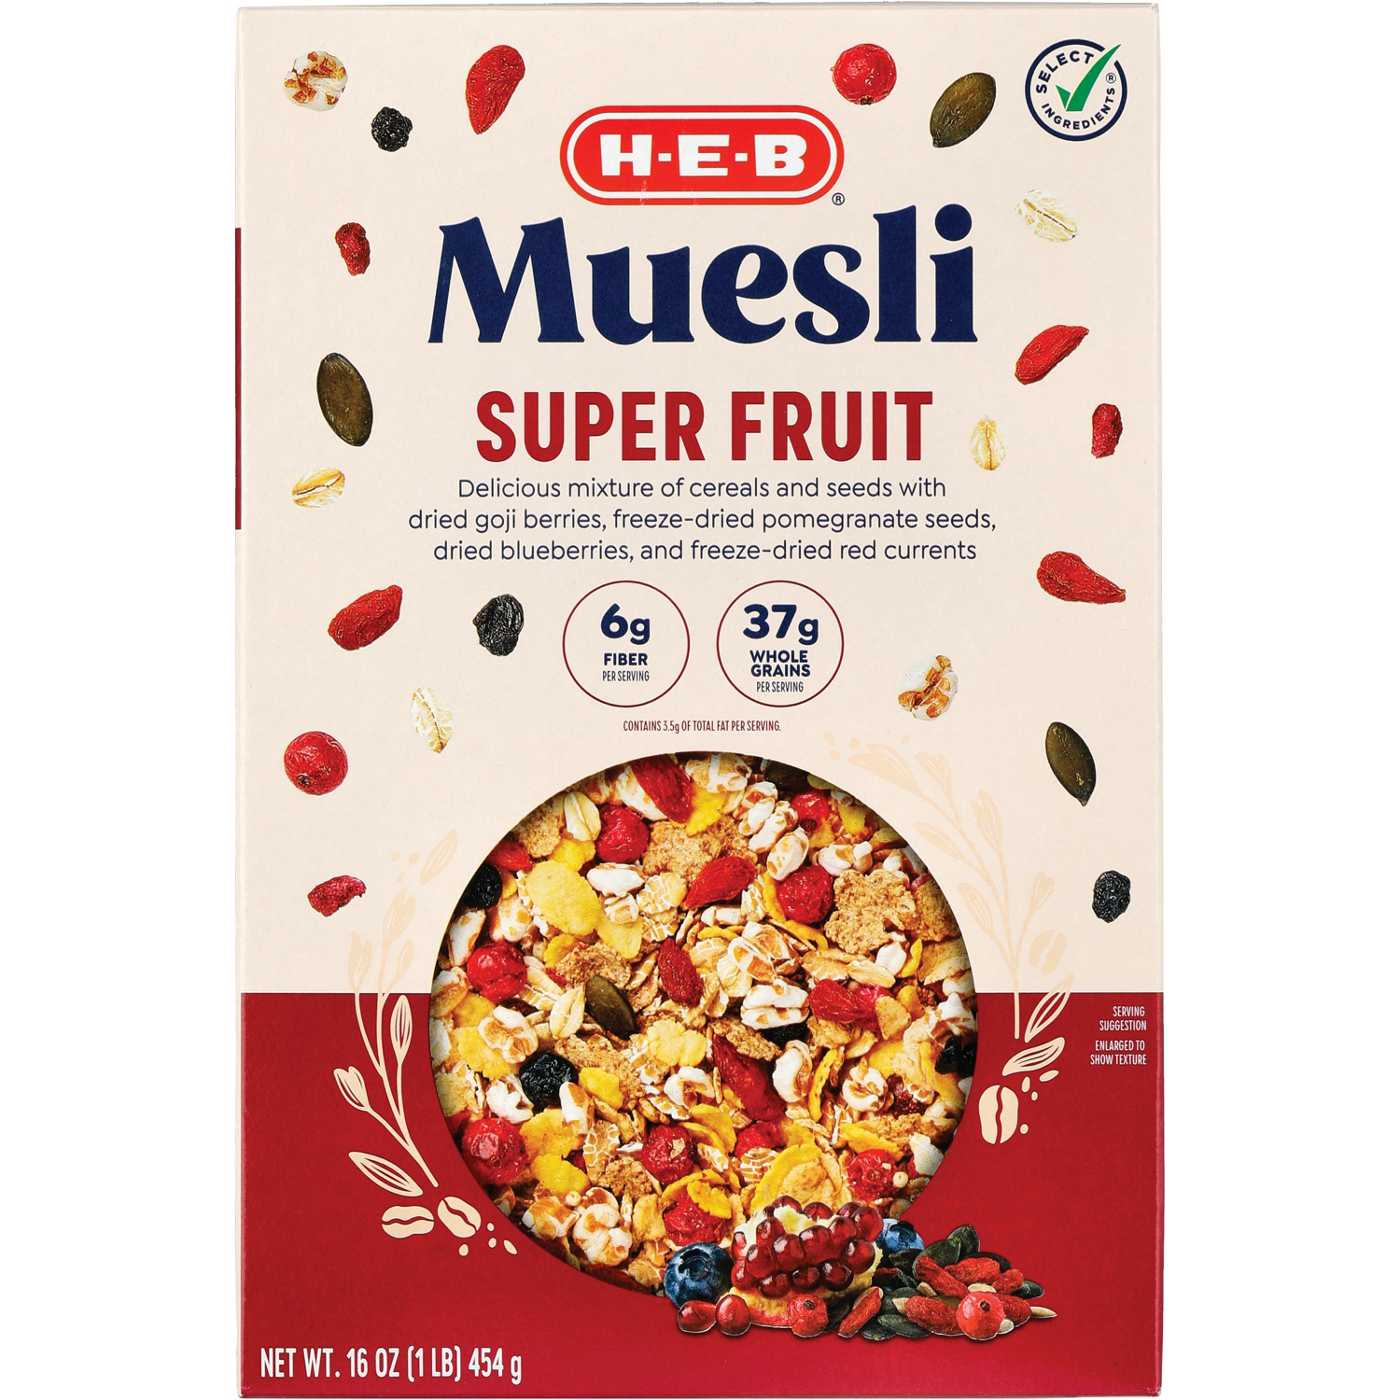 H-E-B Super Fruit Muesli; image 1 of 2